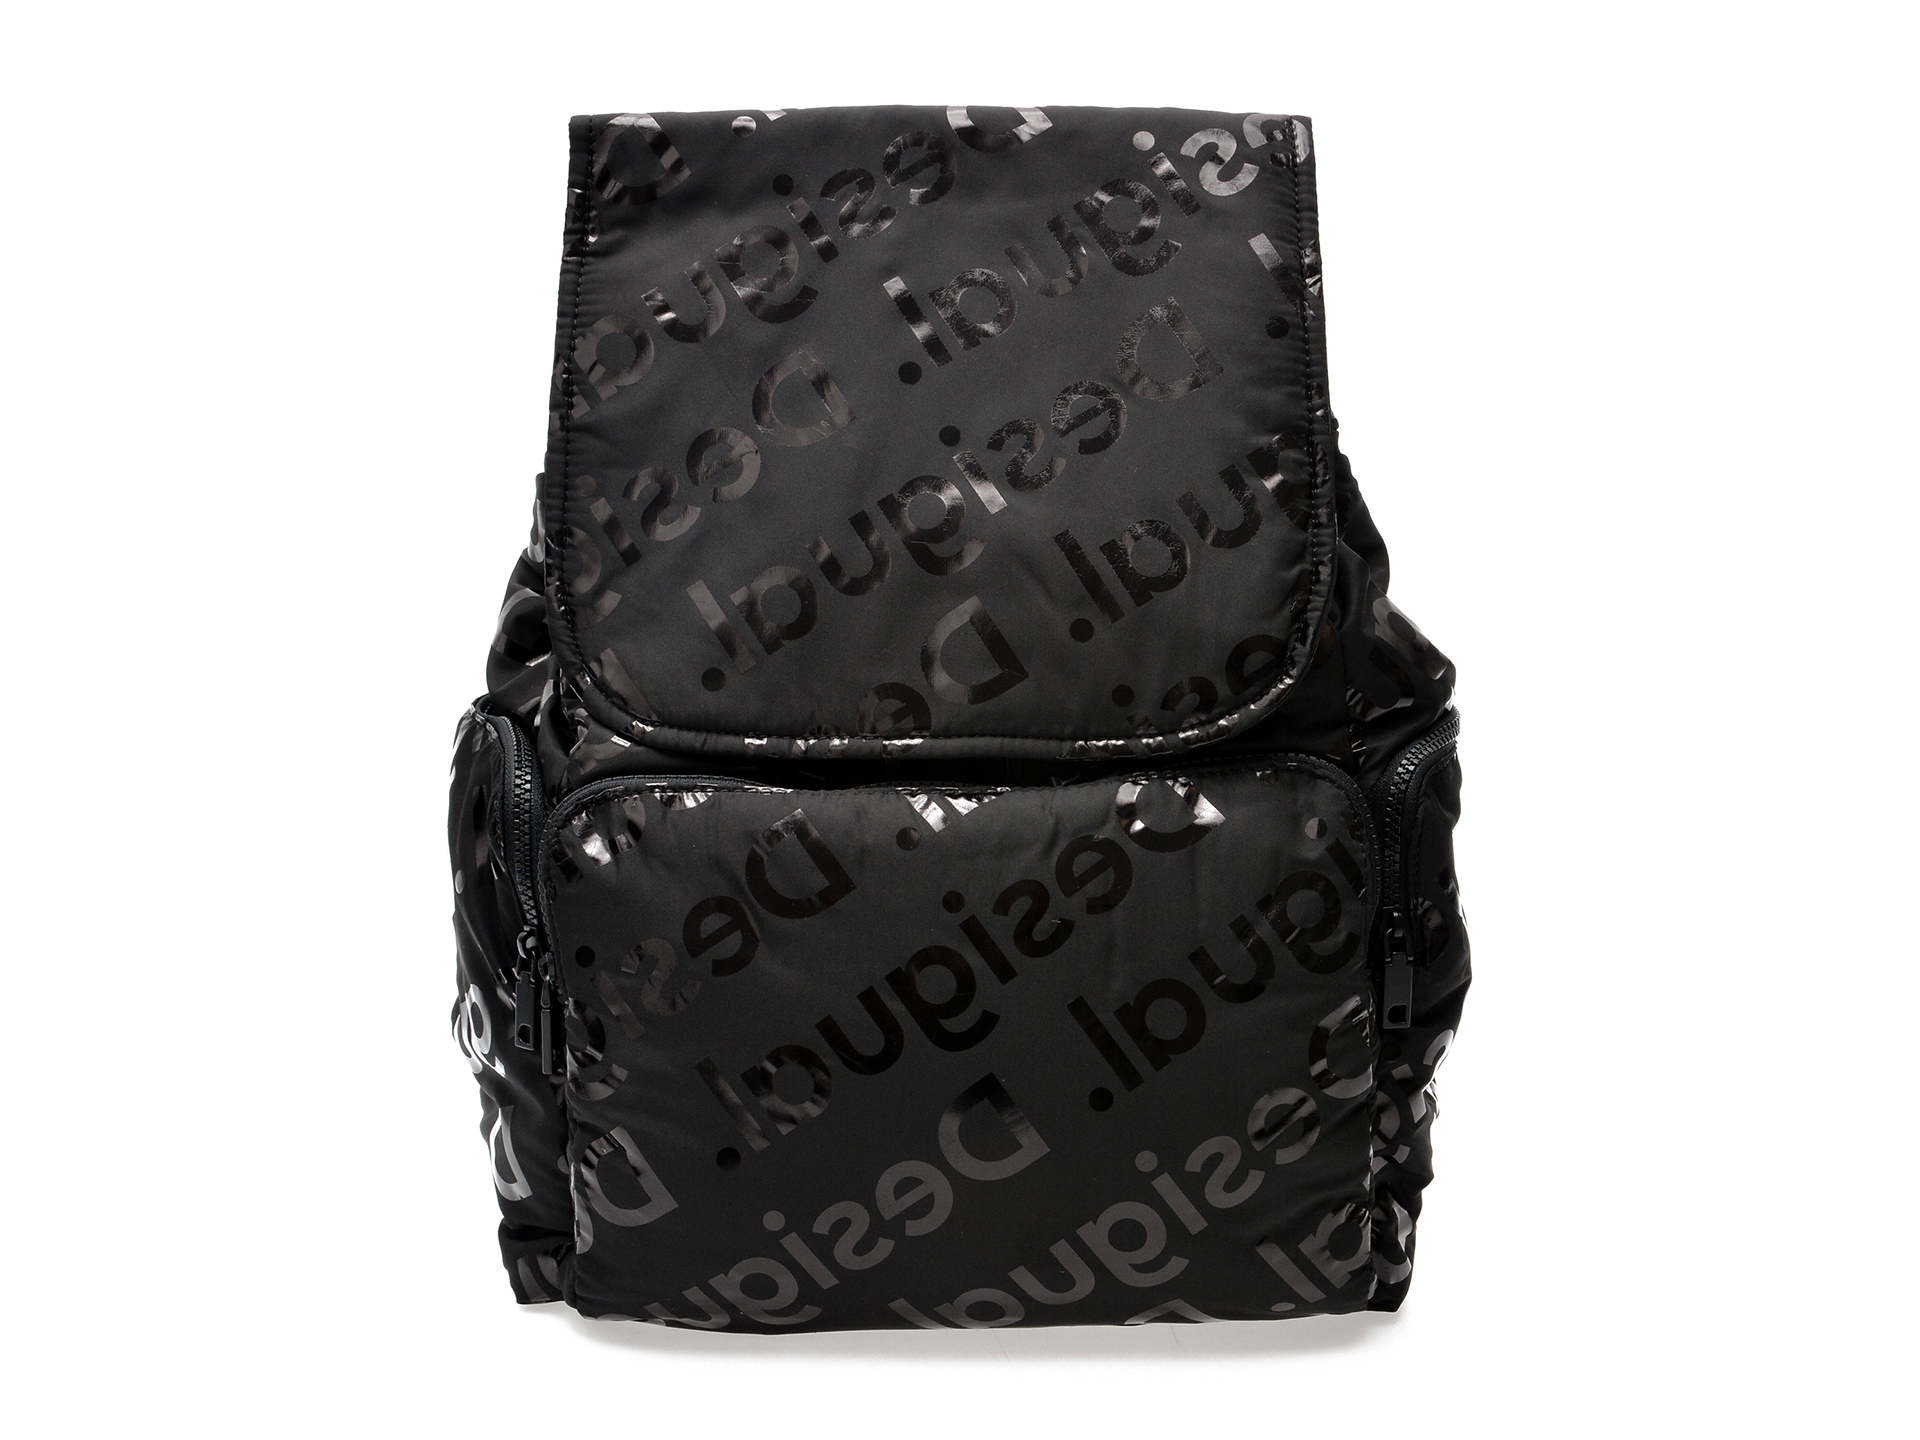 Rucsac DESIGUAL negru, WAKA05, din material textil Desigual Desigual